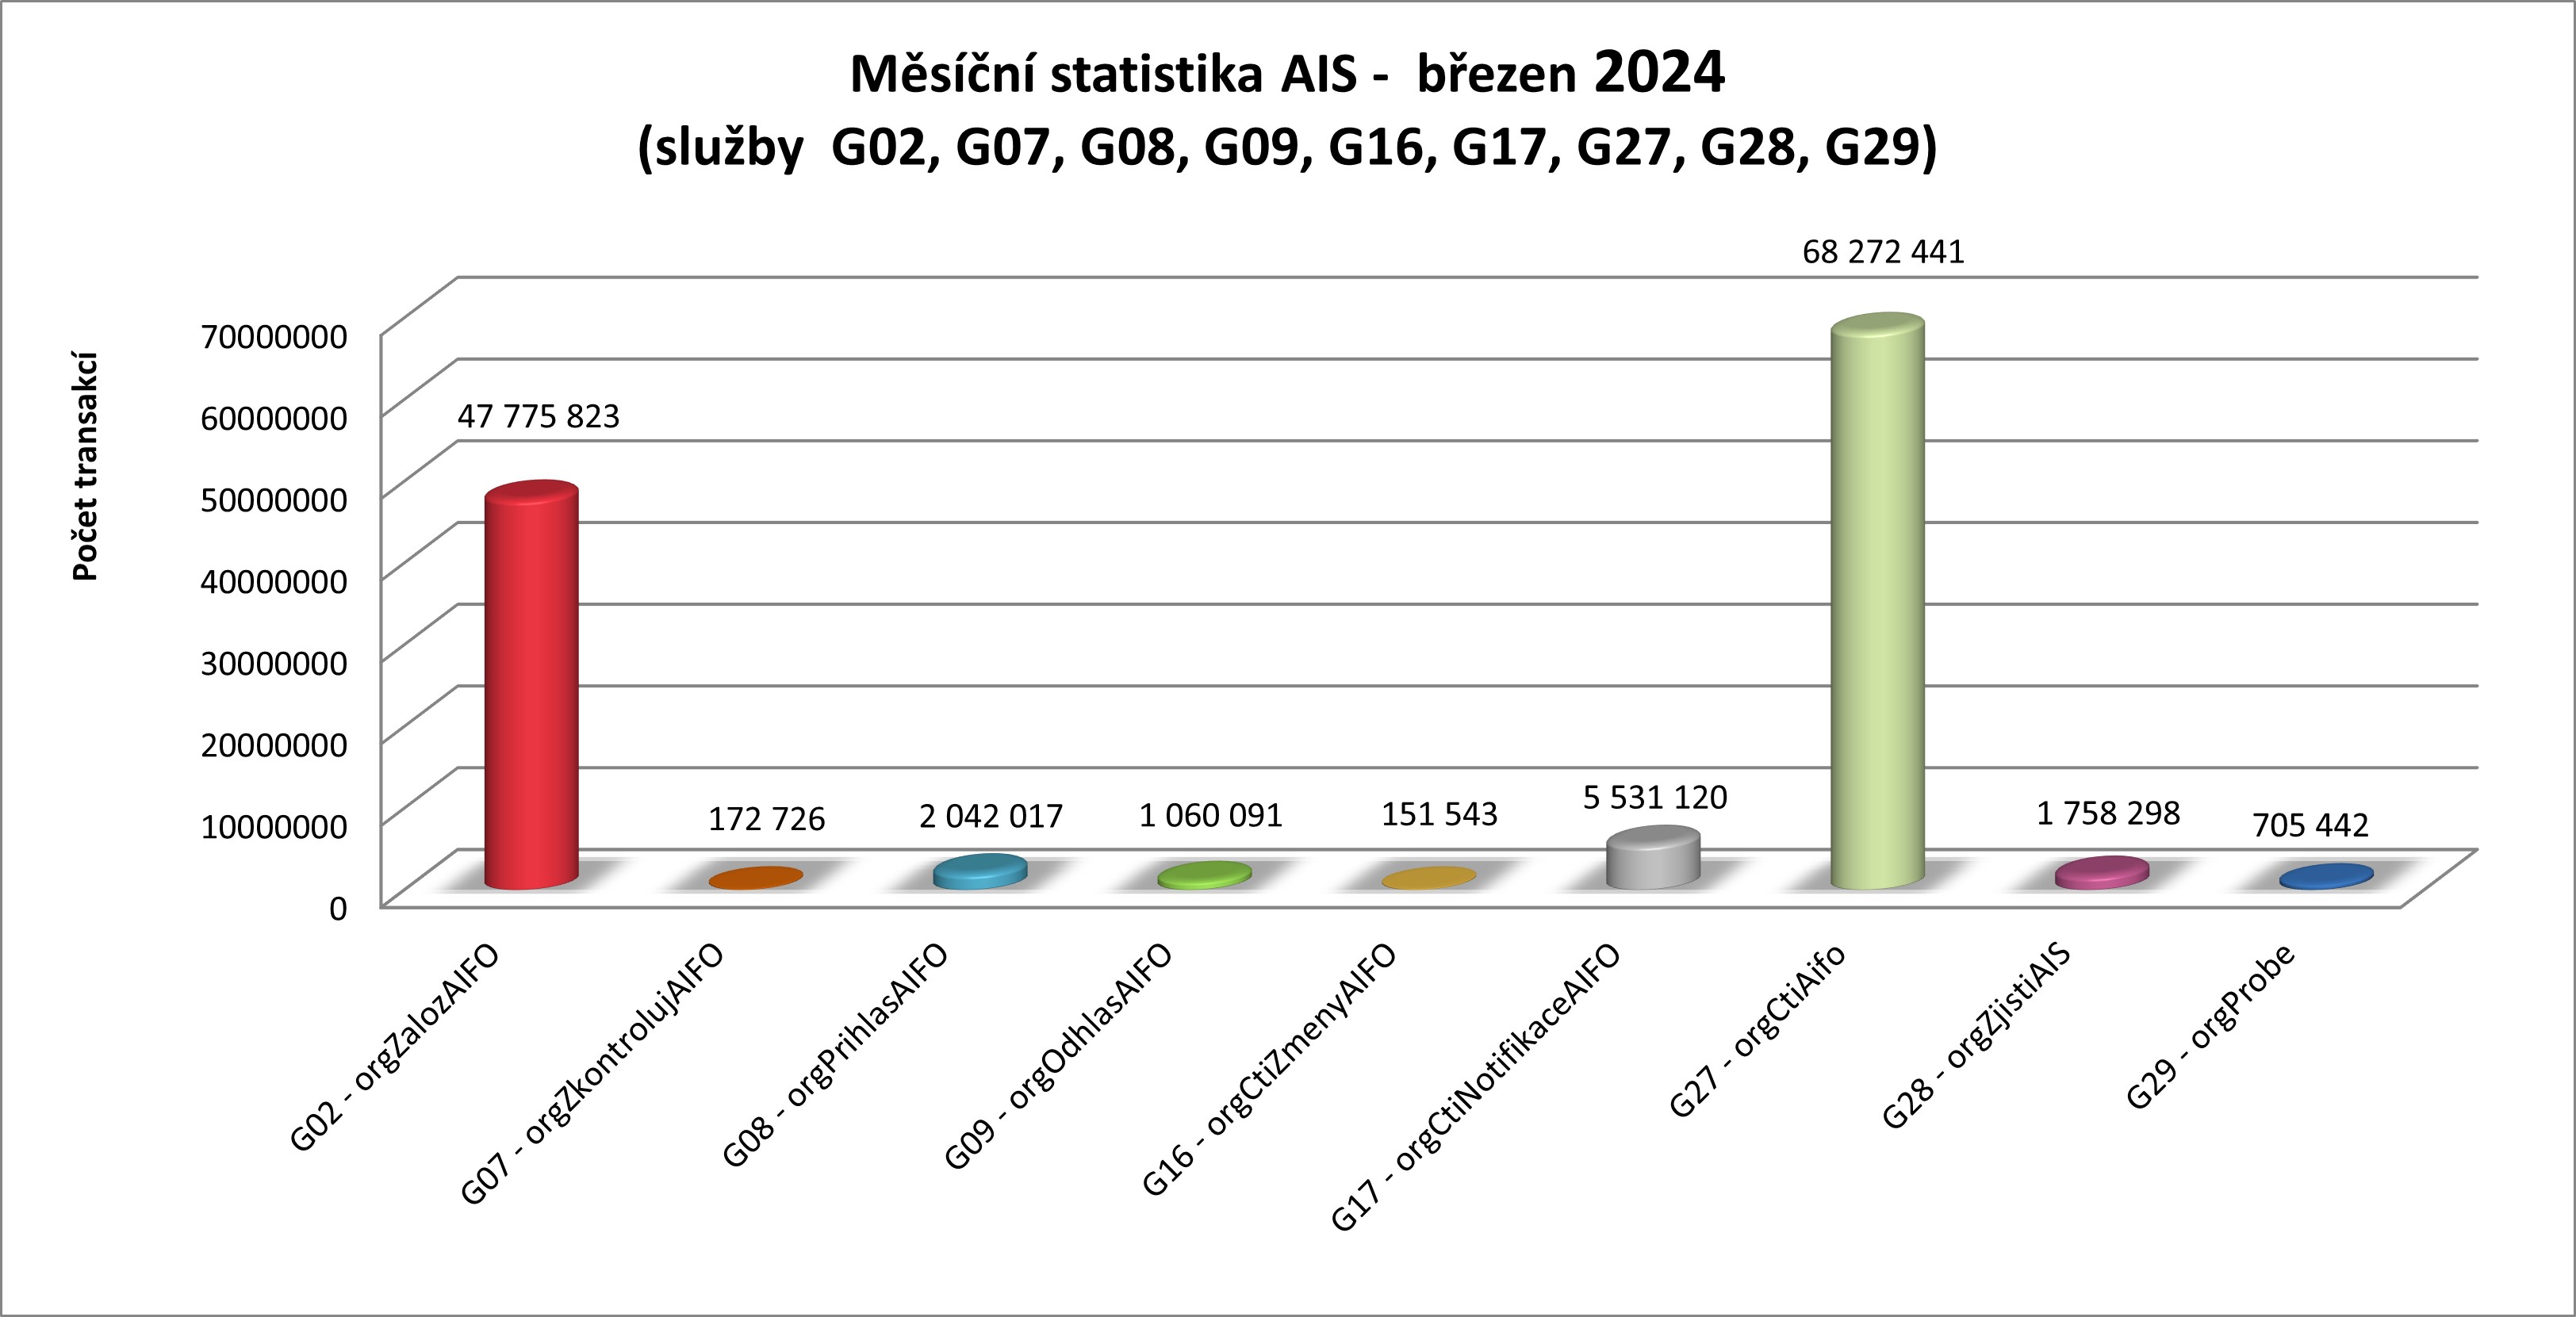 Brezen24 mesicni statistika AIS 2